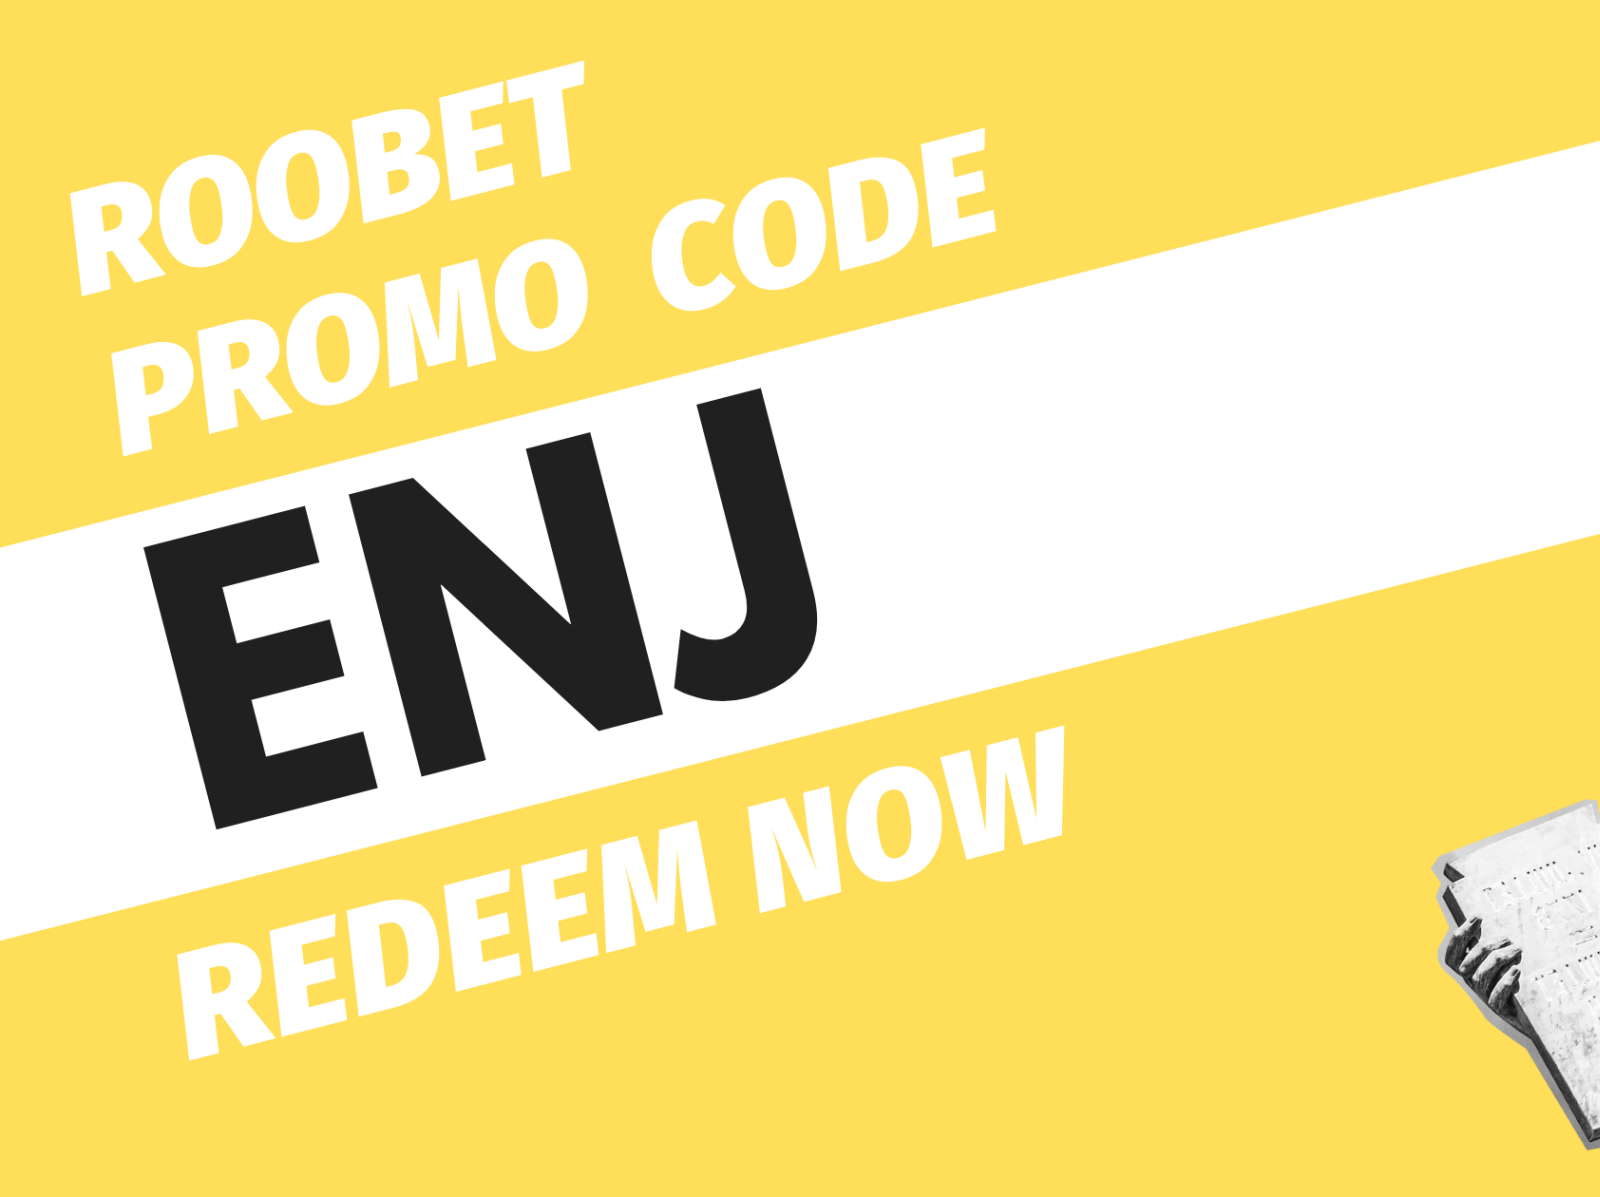 roobet promo code for free money